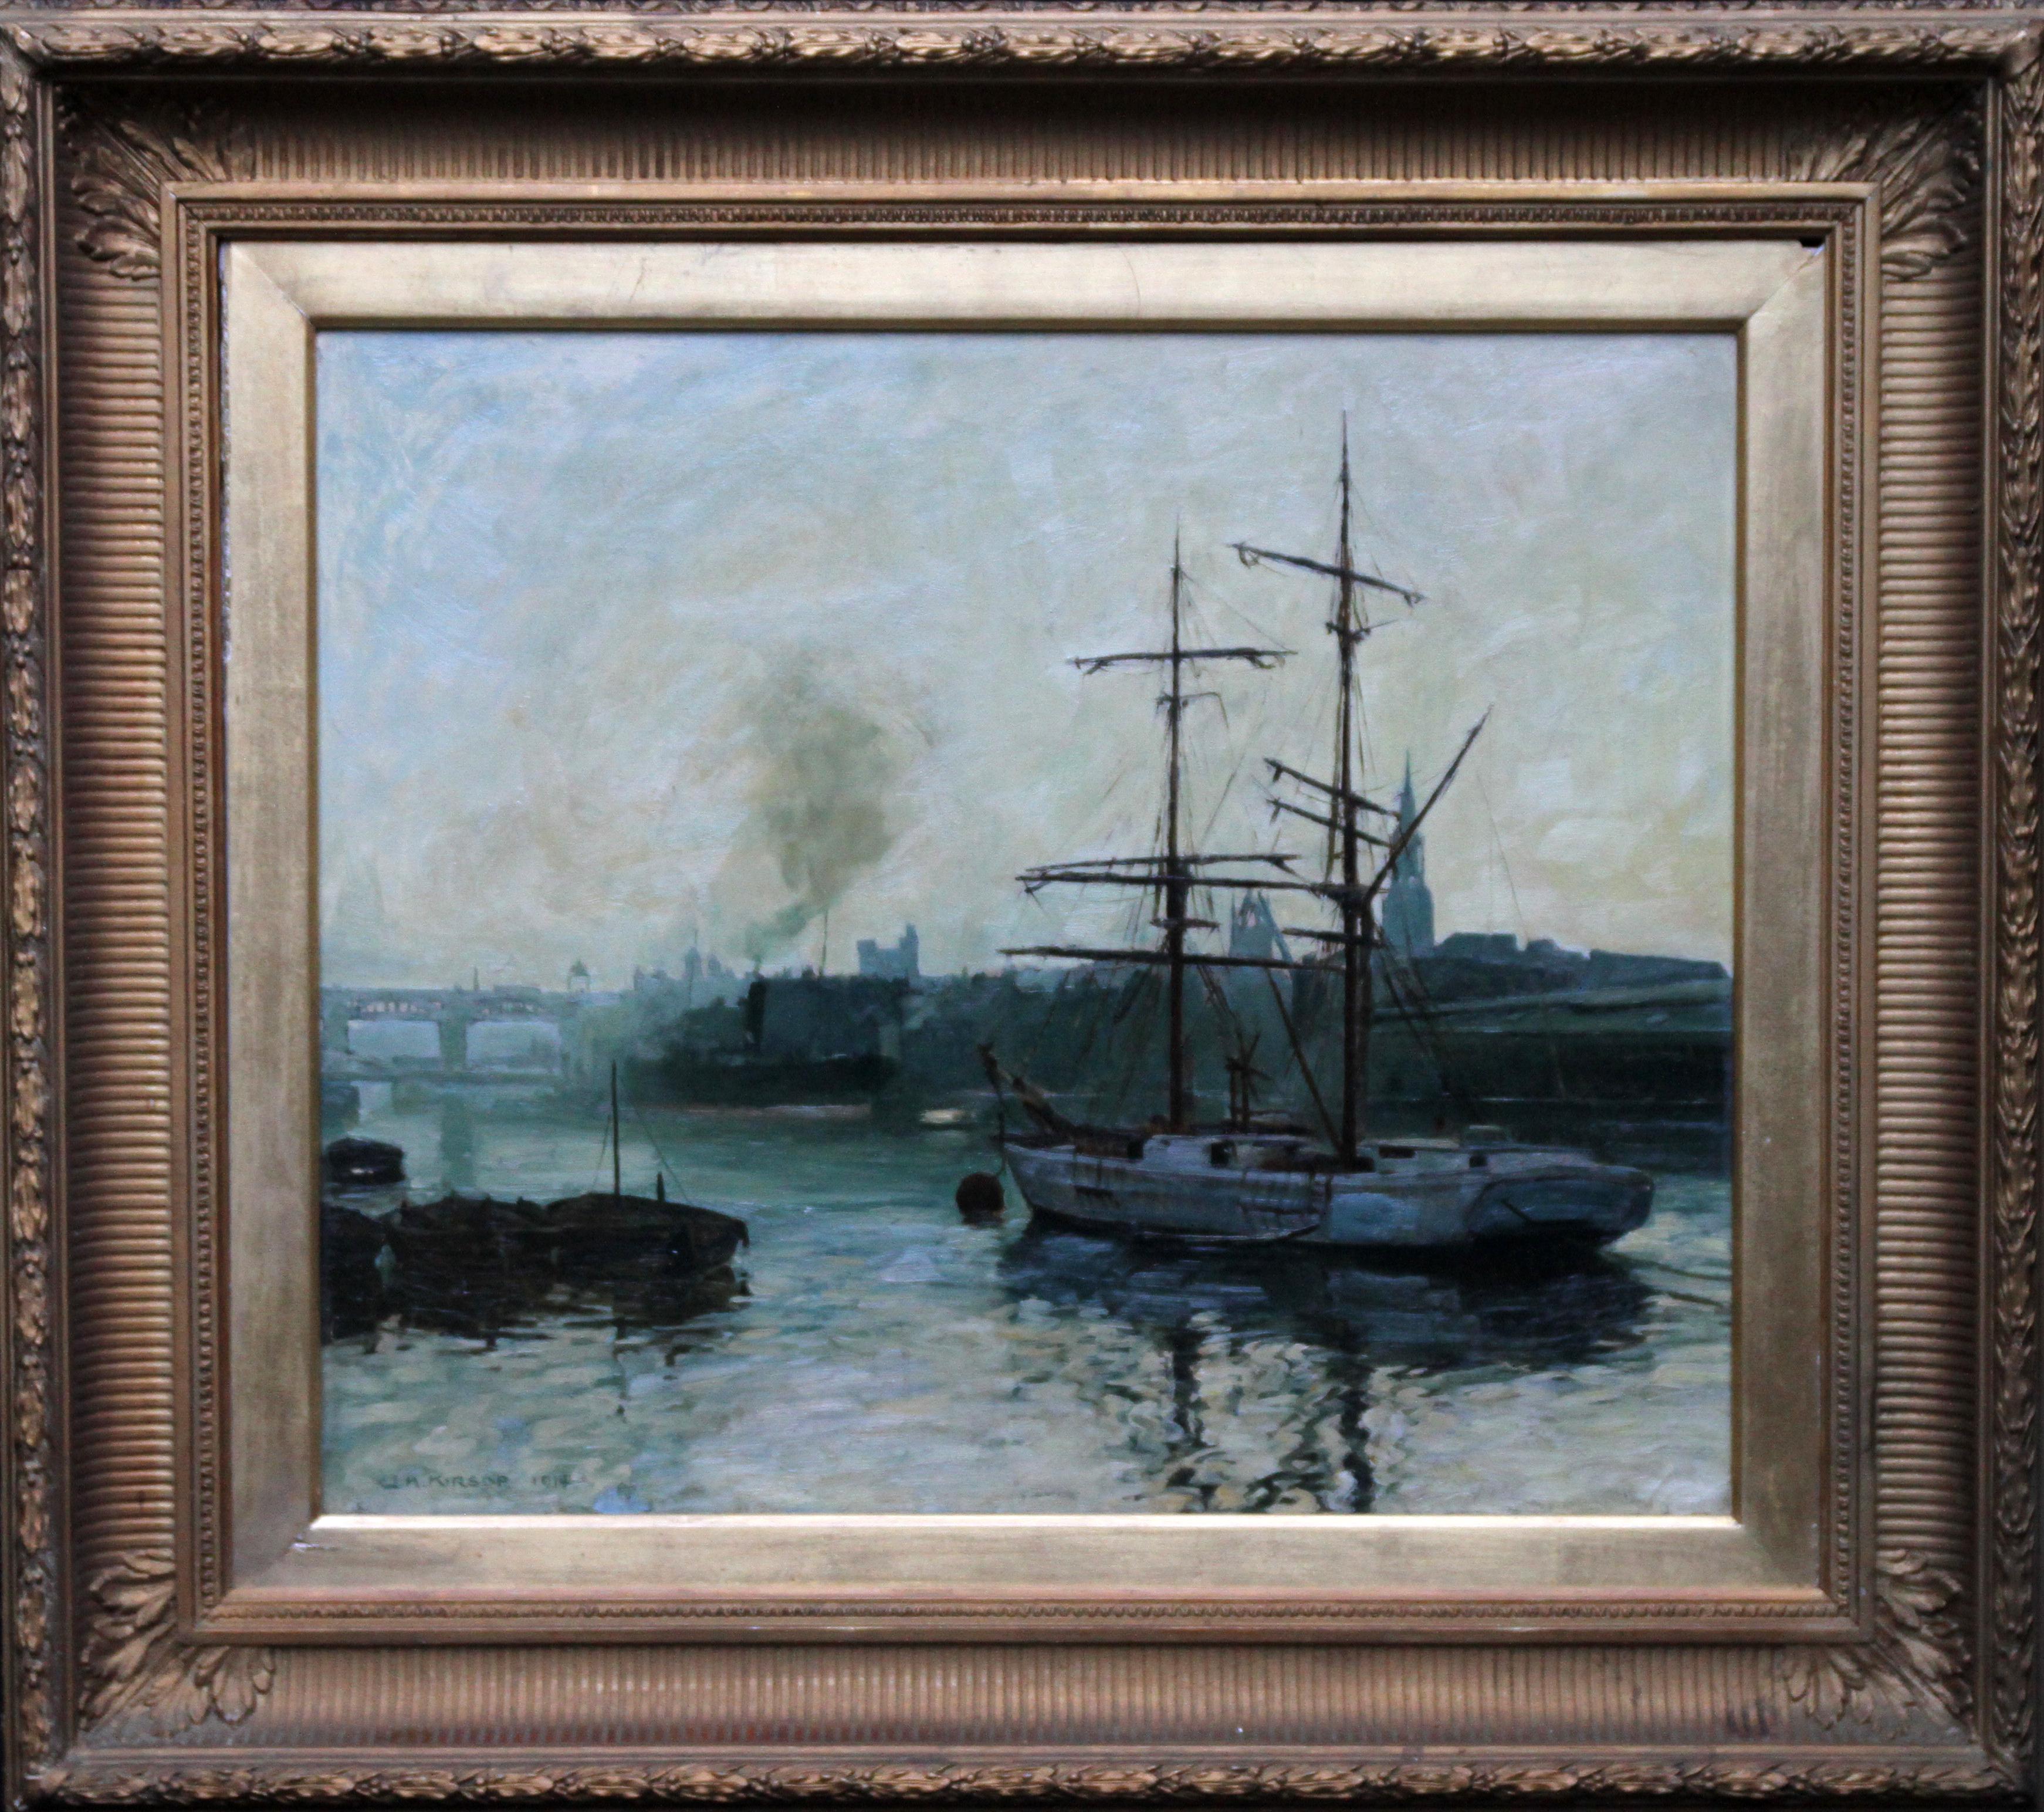 Joseph Henry Kirsop Landscape Painting - The Port of Newcastle Upon Tyne - British 1914 marine art oil painting